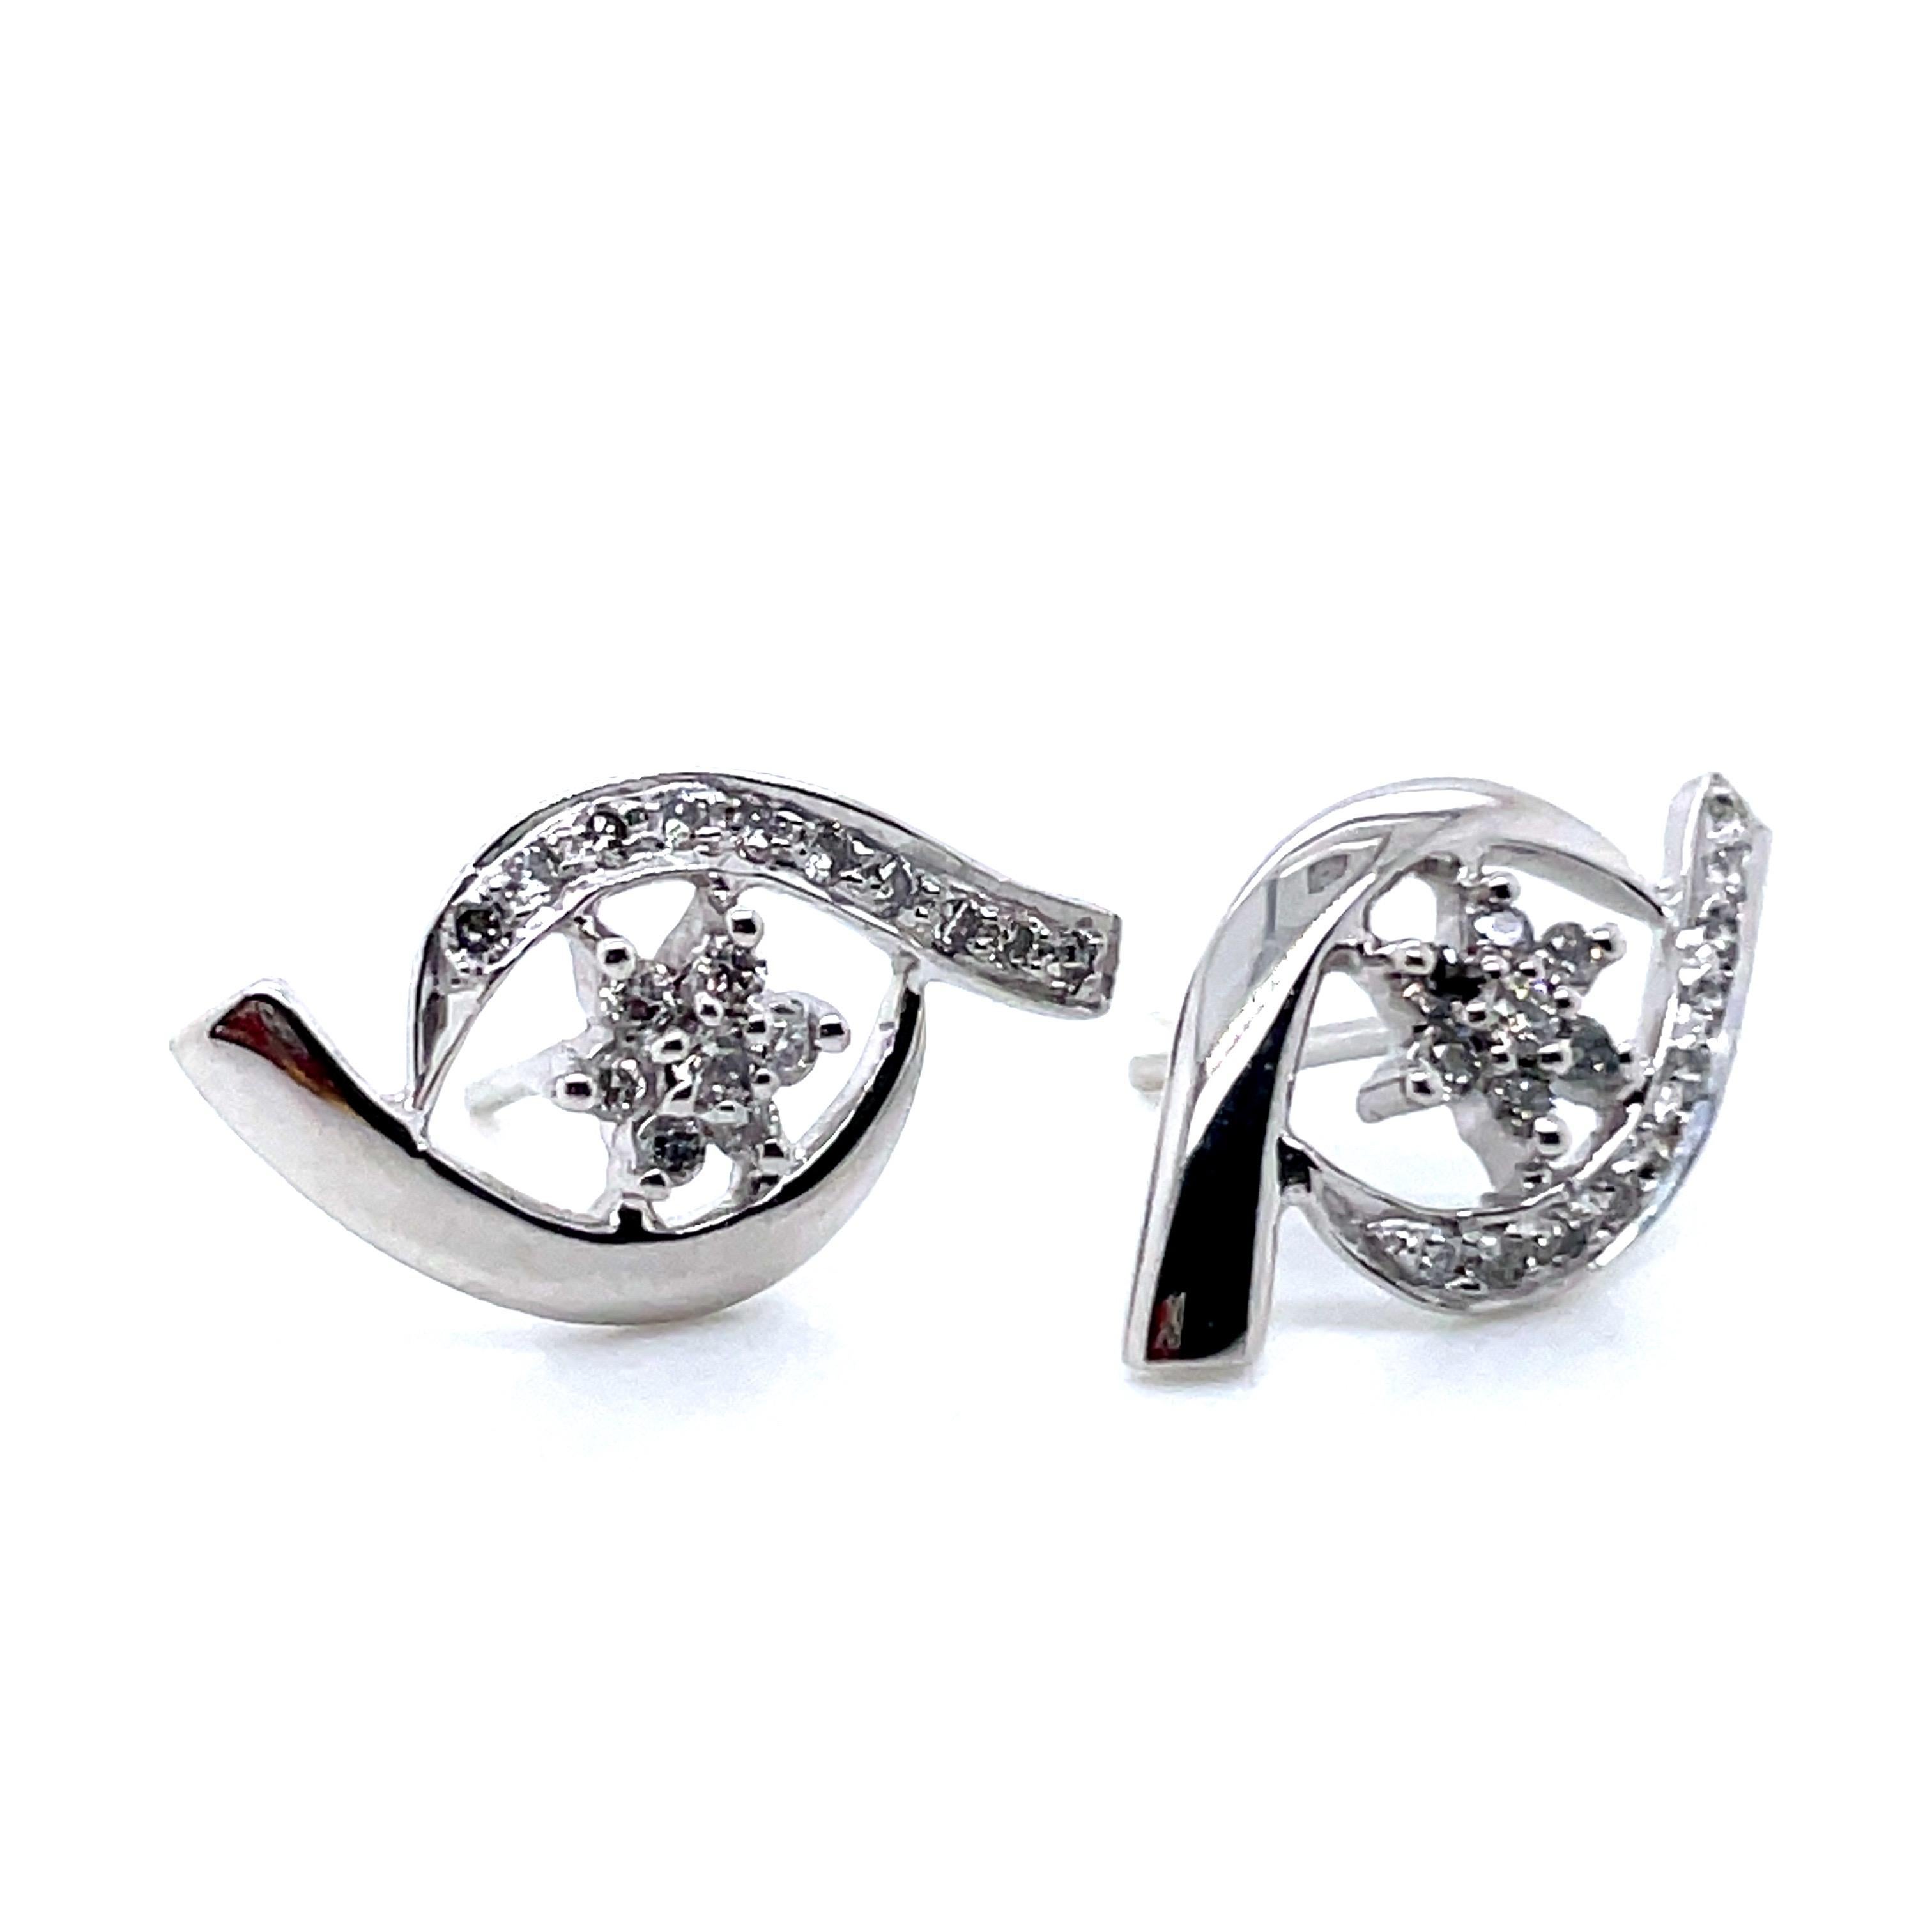 Brilliant Cut 18k White Gold Twist Design Earrings With Diamonds For Sale